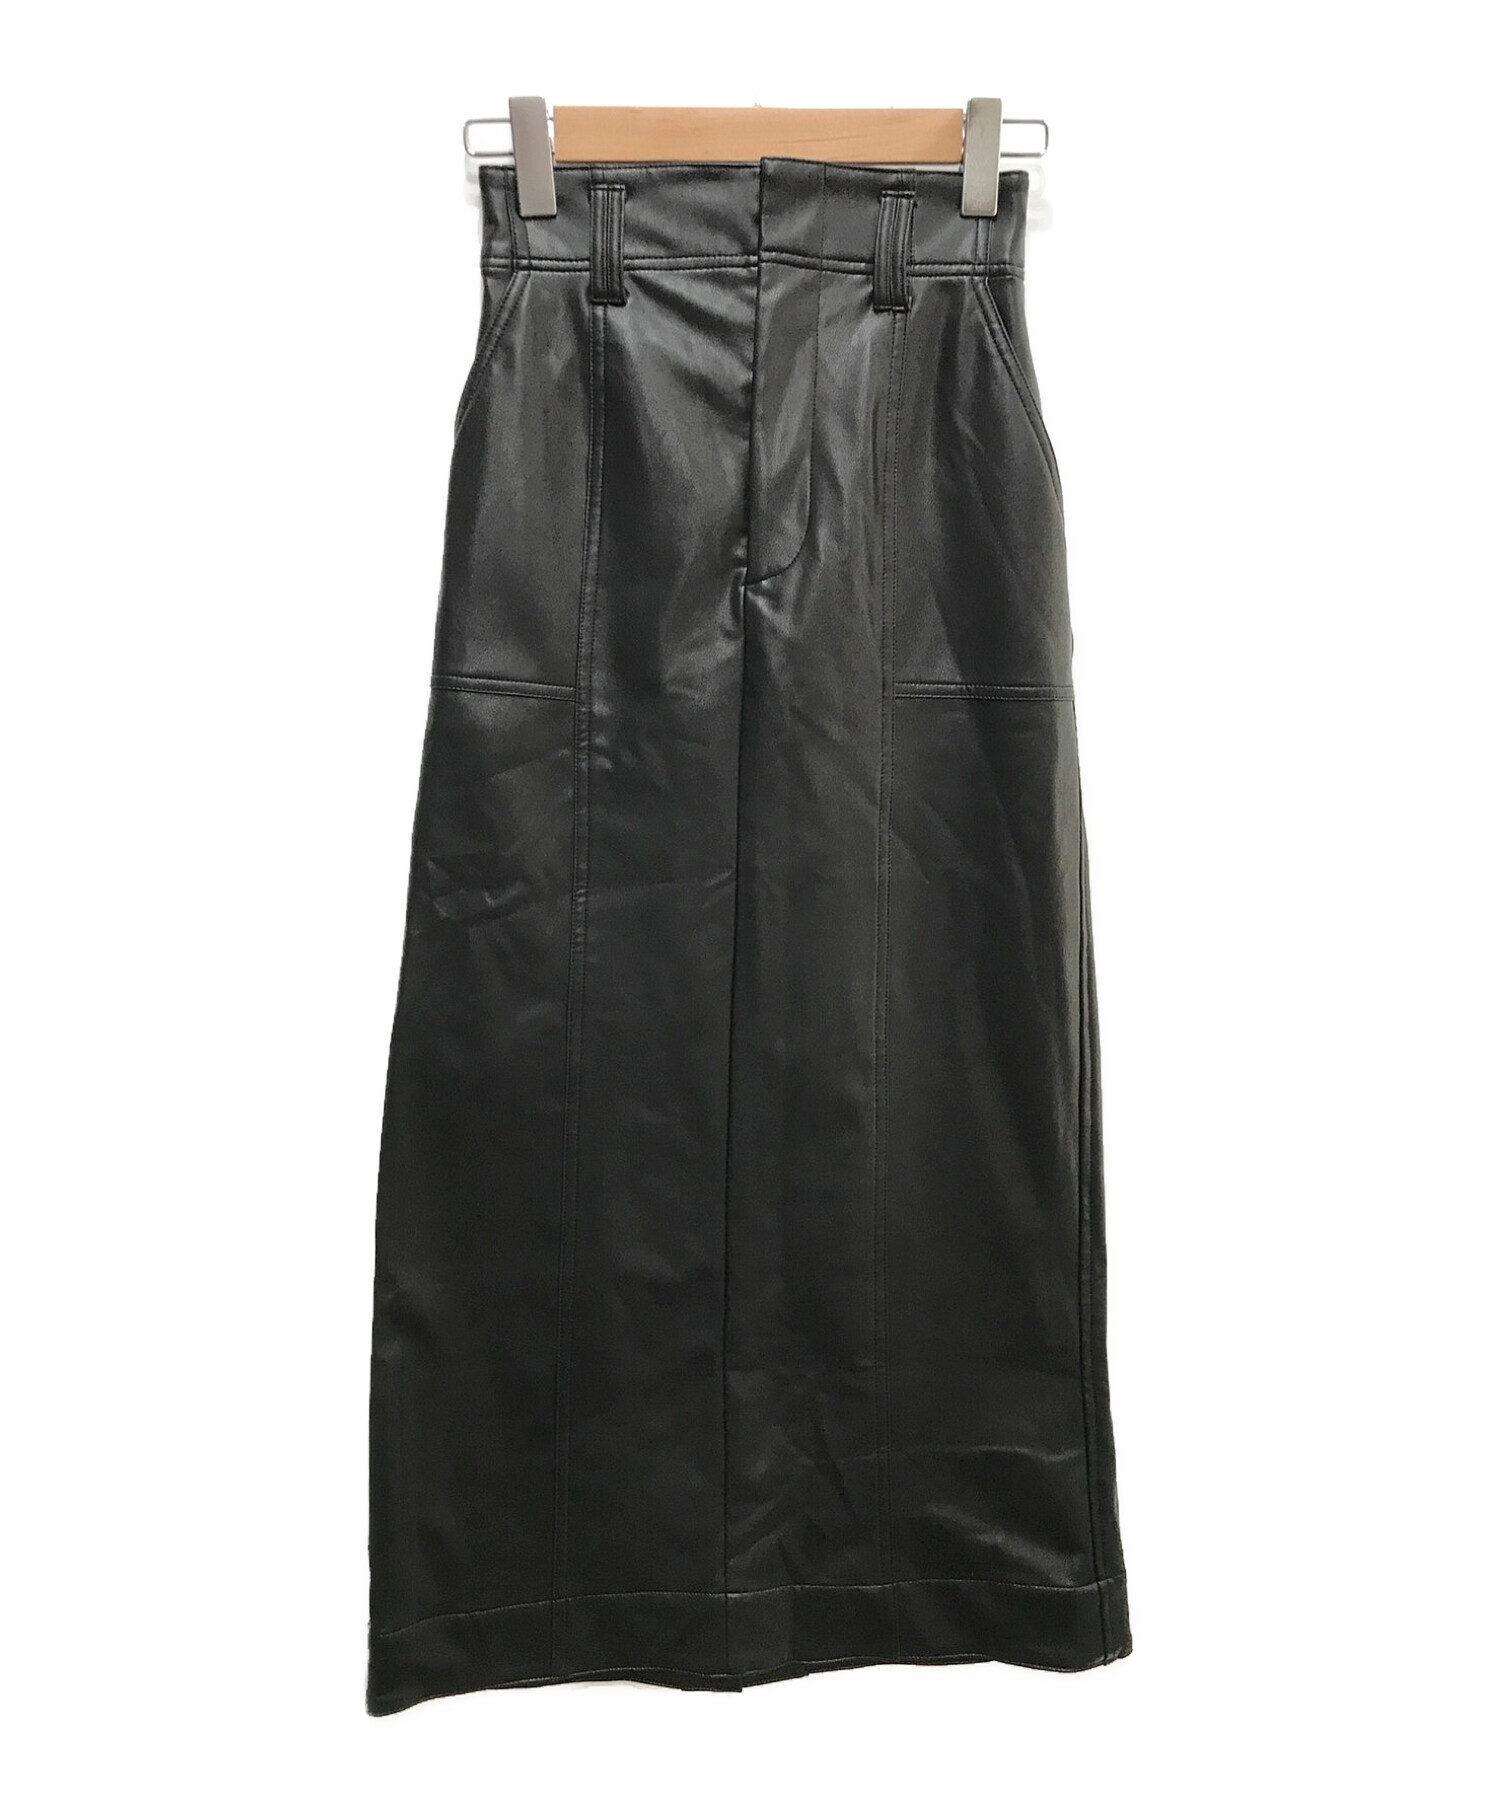 Lily brown/タフタストレートラインスカート